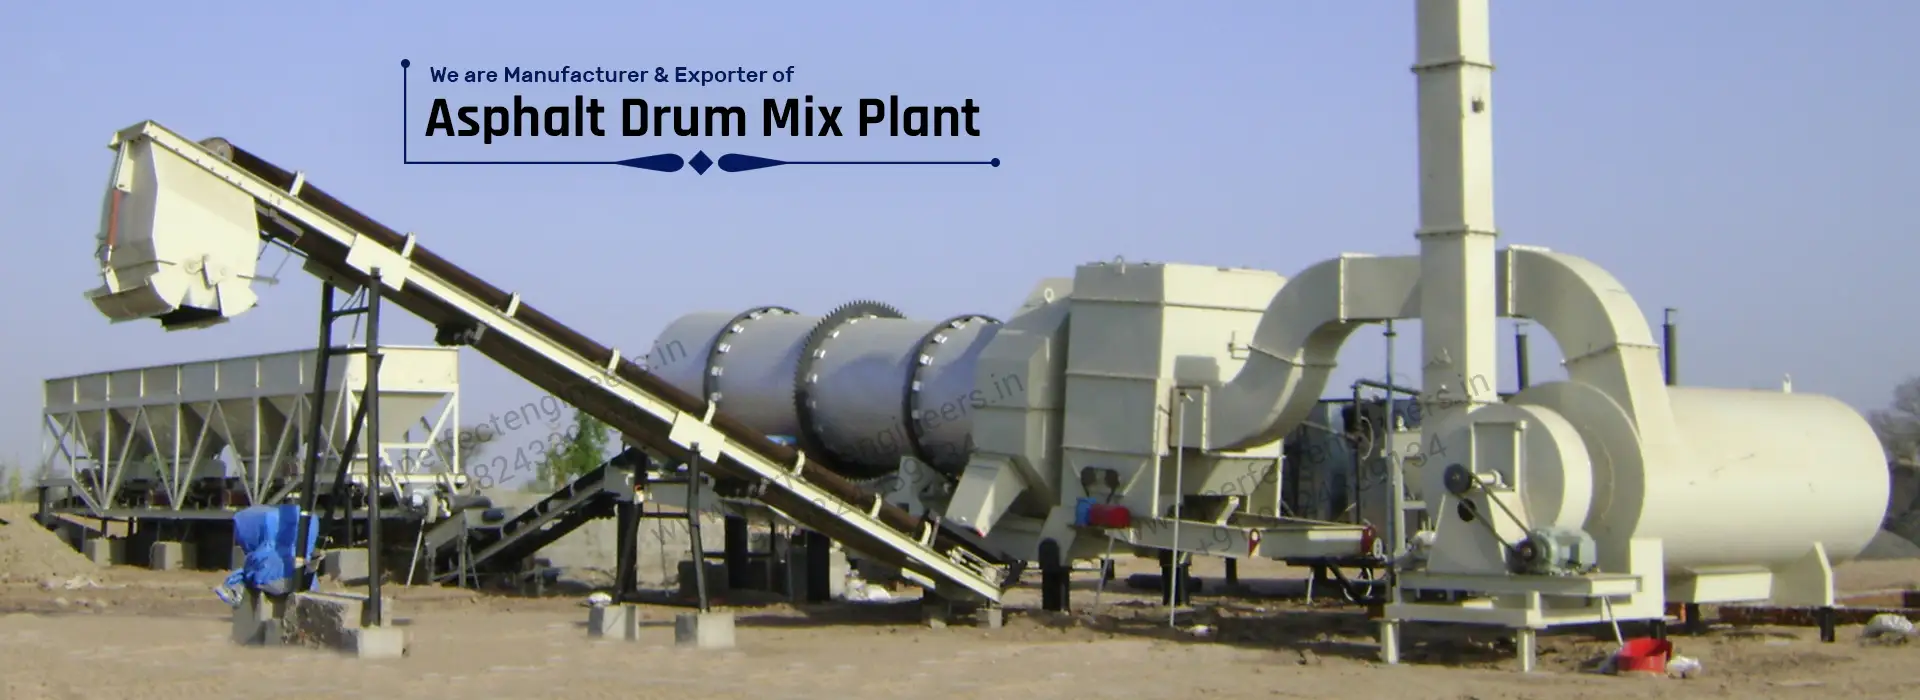 Asphalt drum mix plant manufacturer